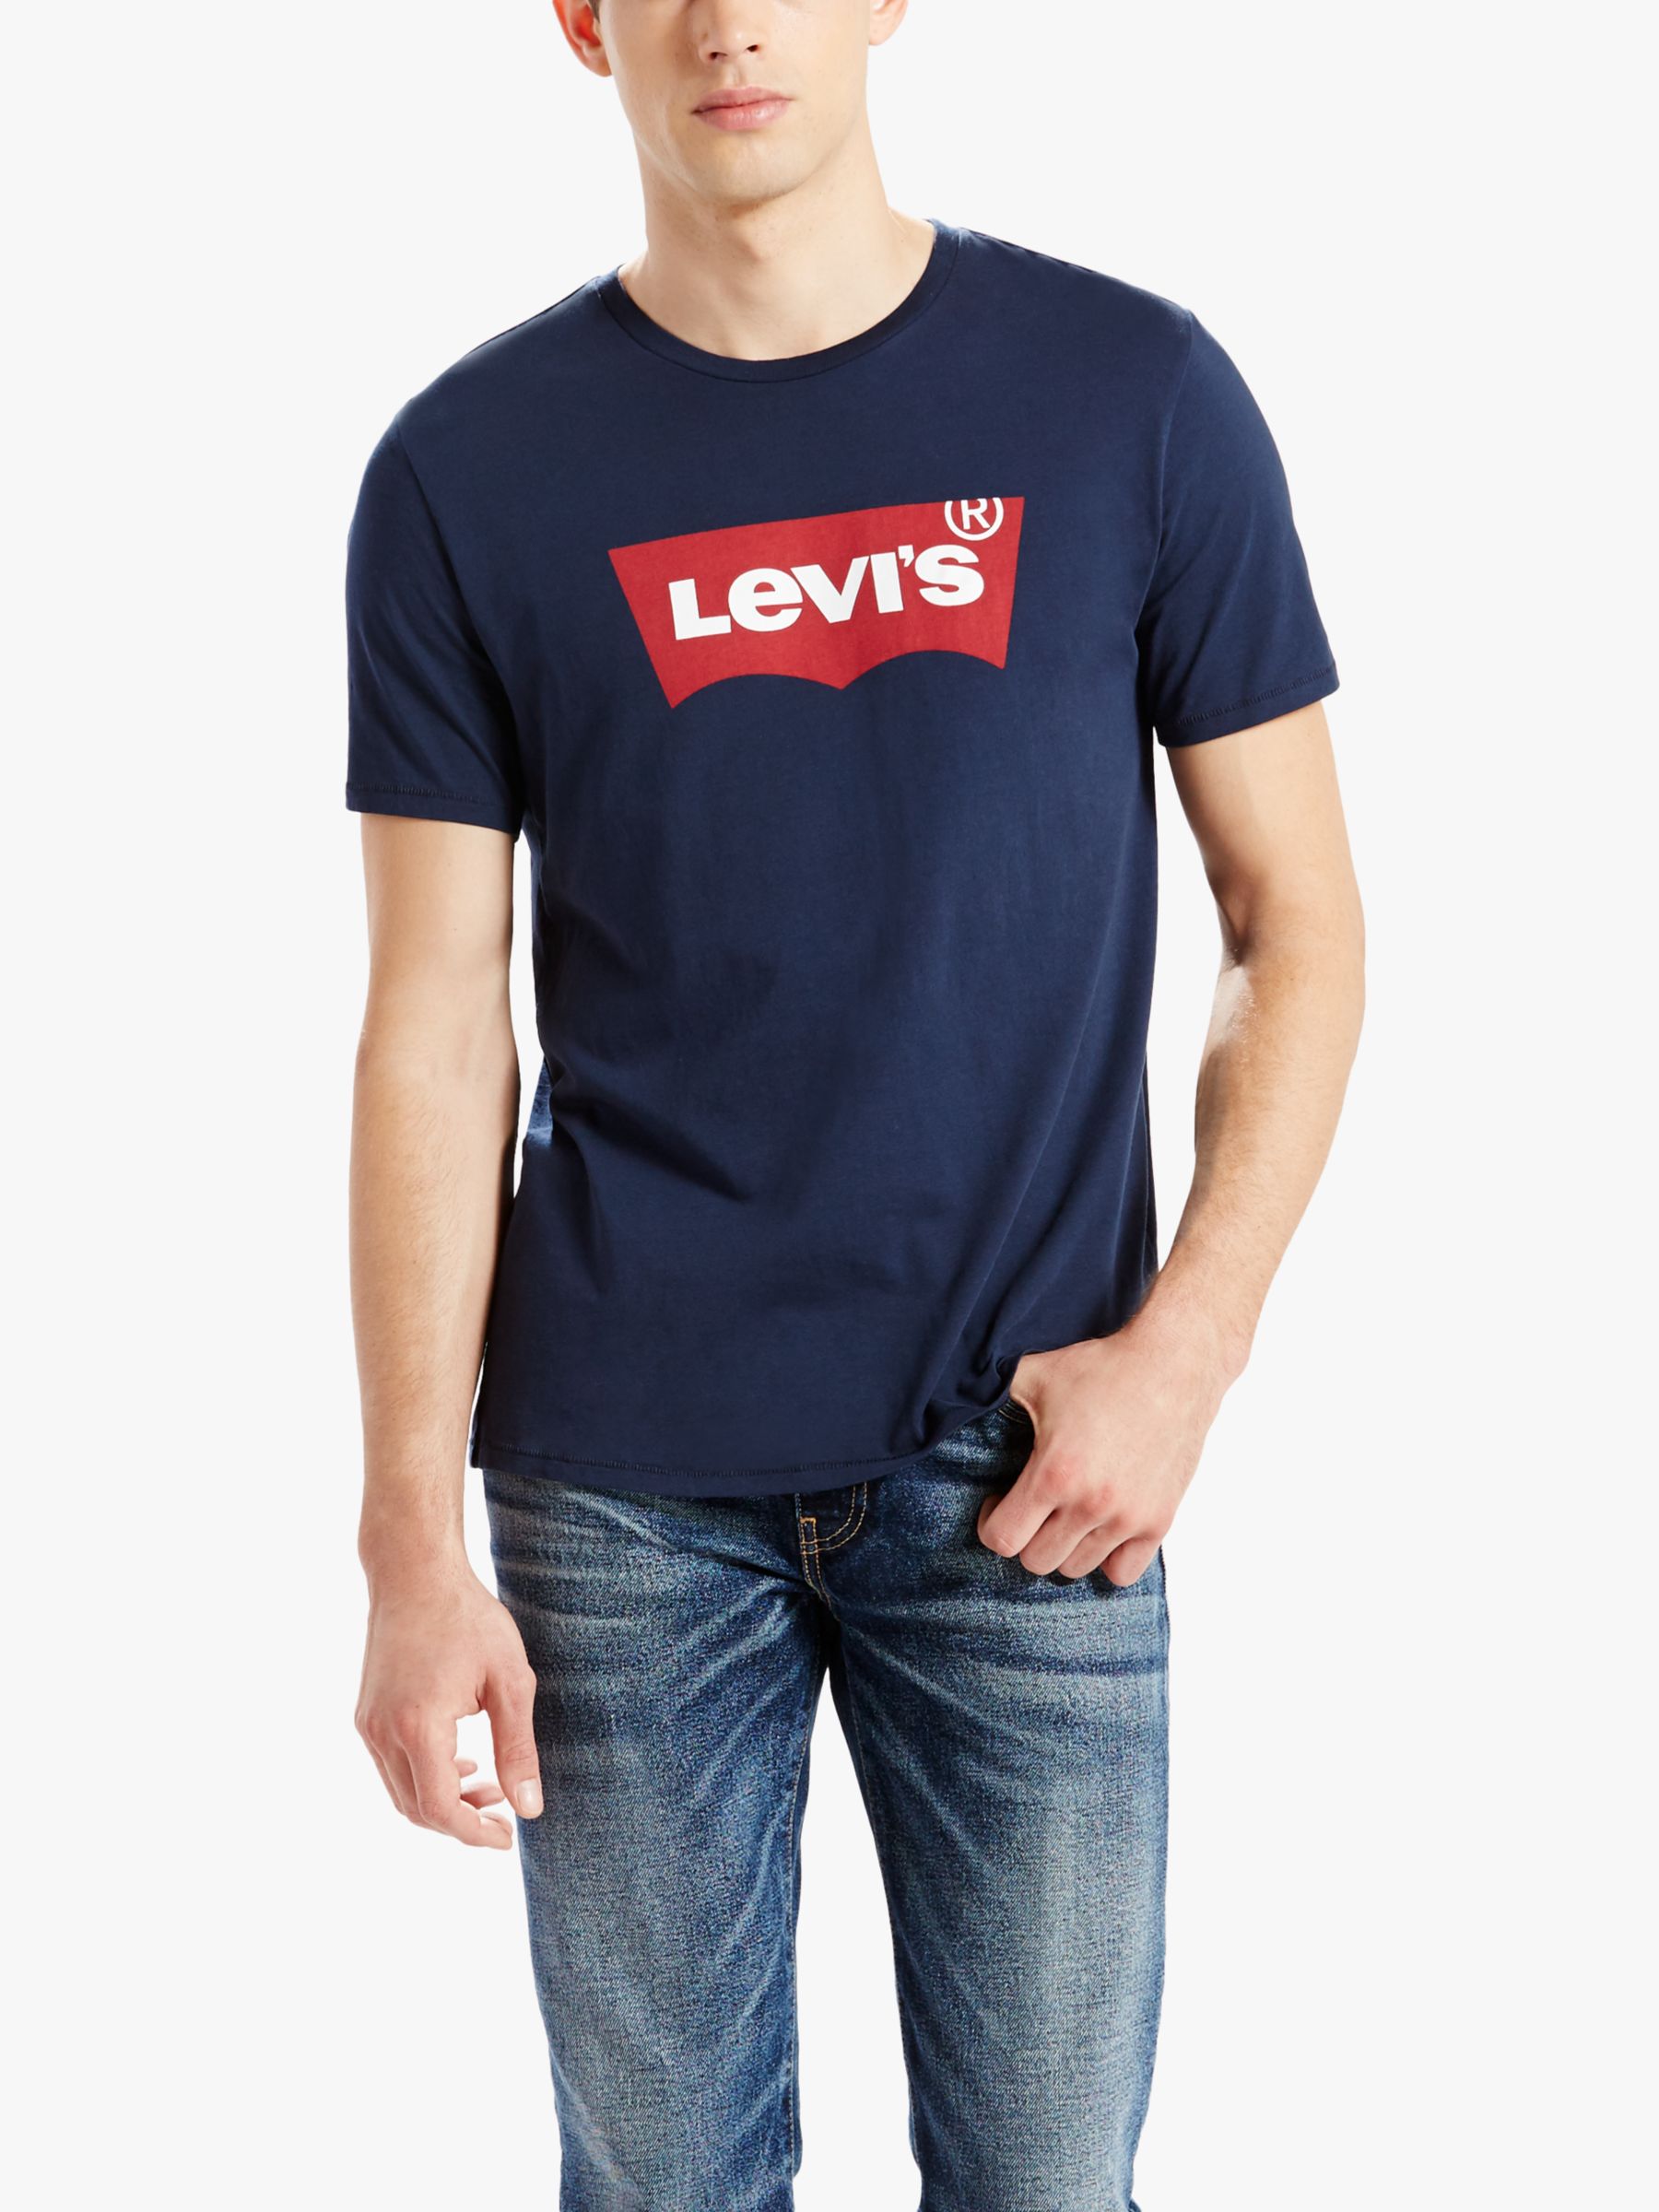 Levi's Batwing Graphic Logo T-Shirt, Dress Blues at John Lewis & Partners